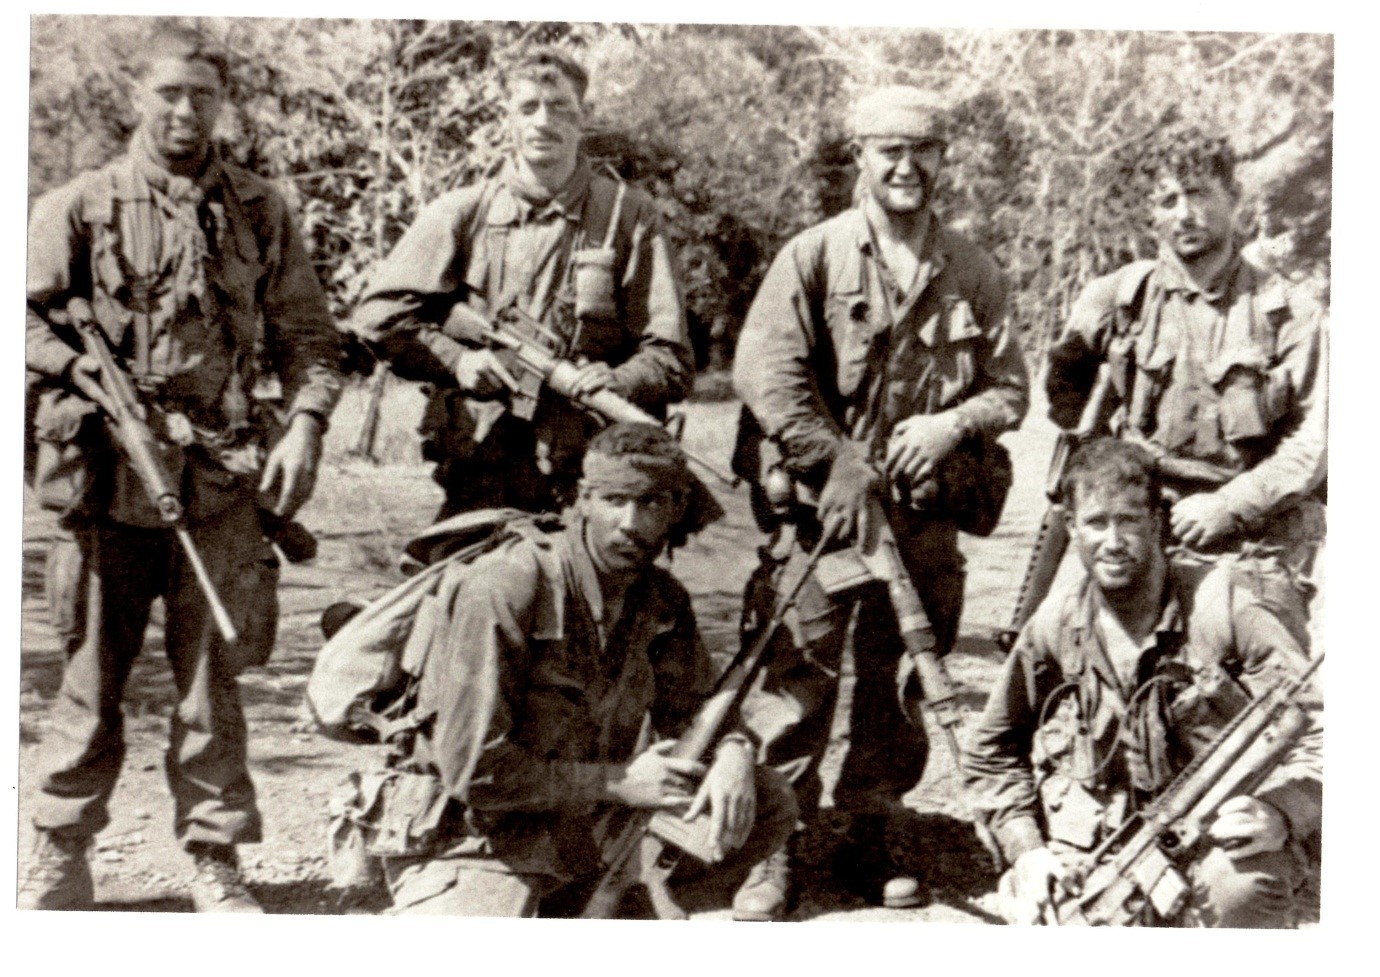 Terry Culley's last patrol in Vietnam